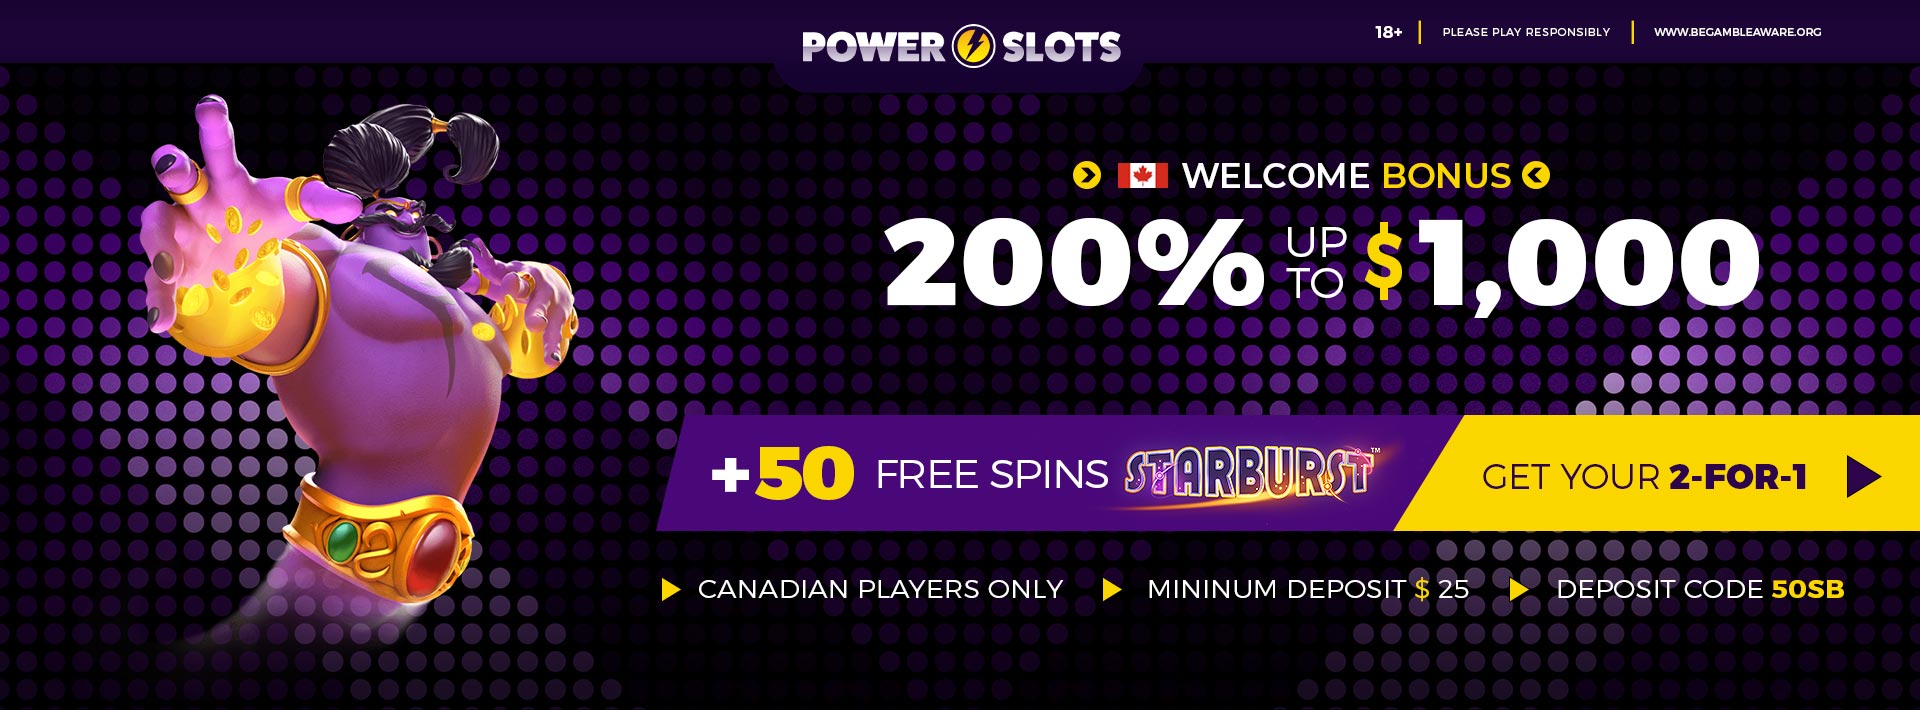 $1000 Bonus + 50 Free Spins | Power Slots Casino